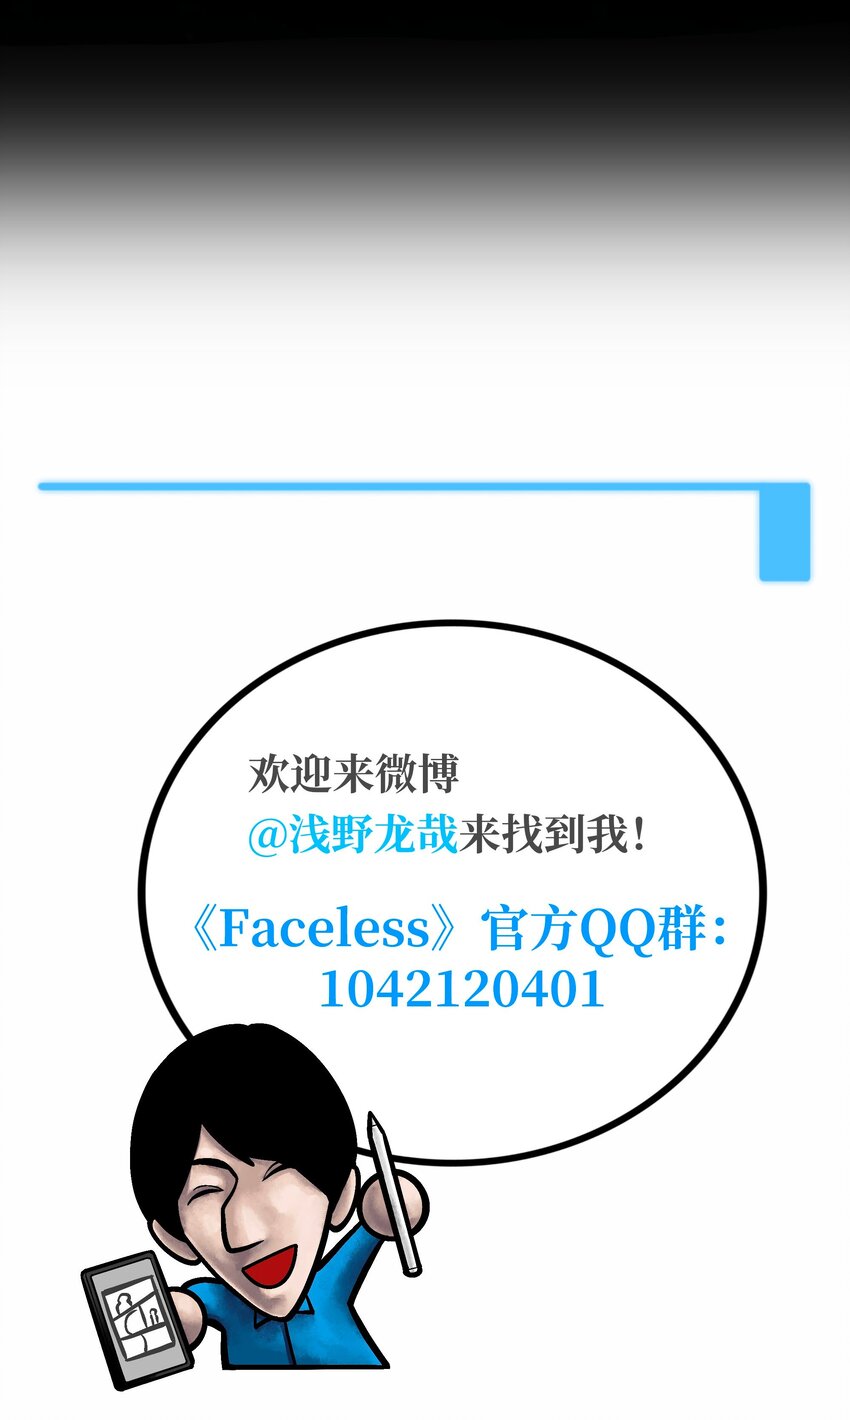 FACELESS - 007 聖子與哥哥(2/2) - 2